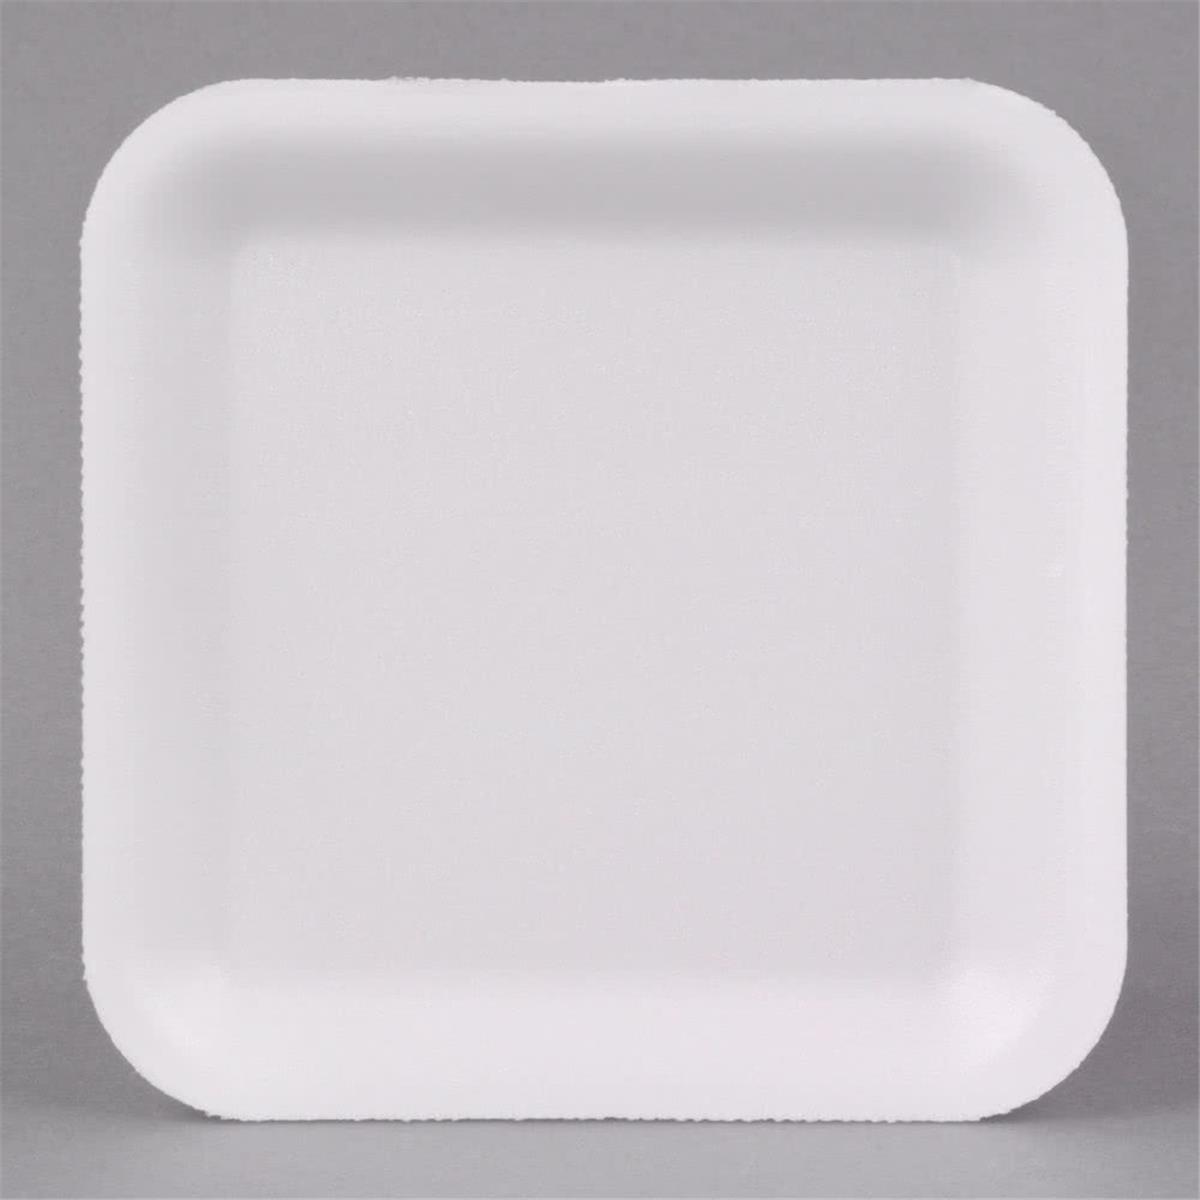 201002sw00 Cpc Foam Tray, White - Case Of 500